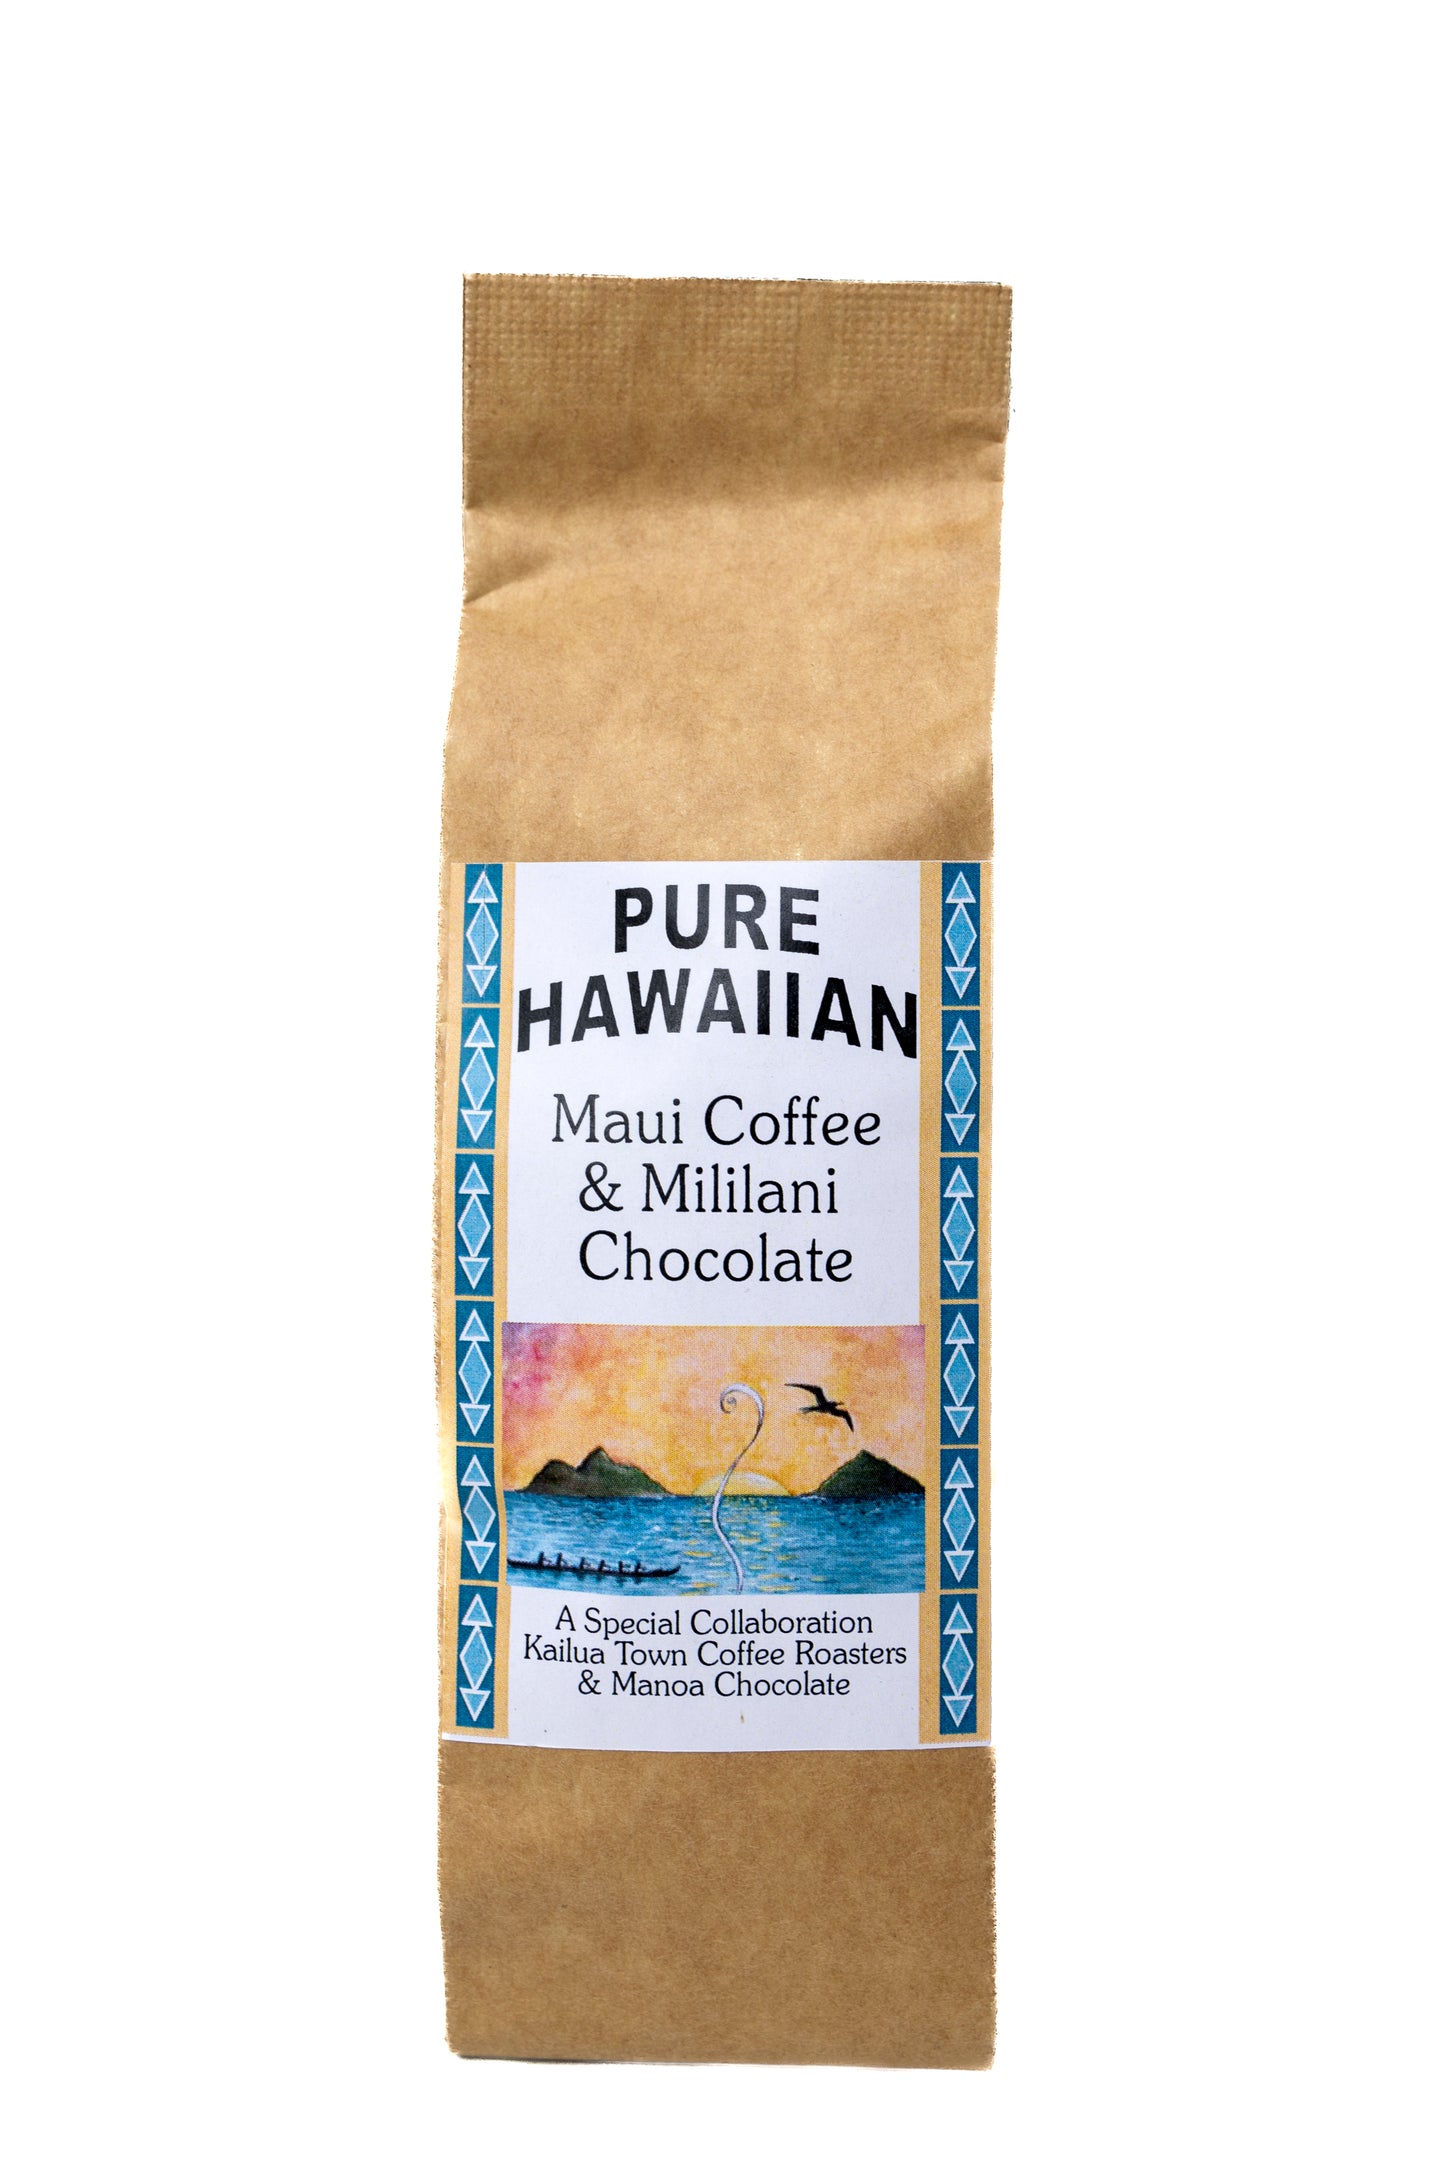 Maui Coffee and Mililani Chocolate